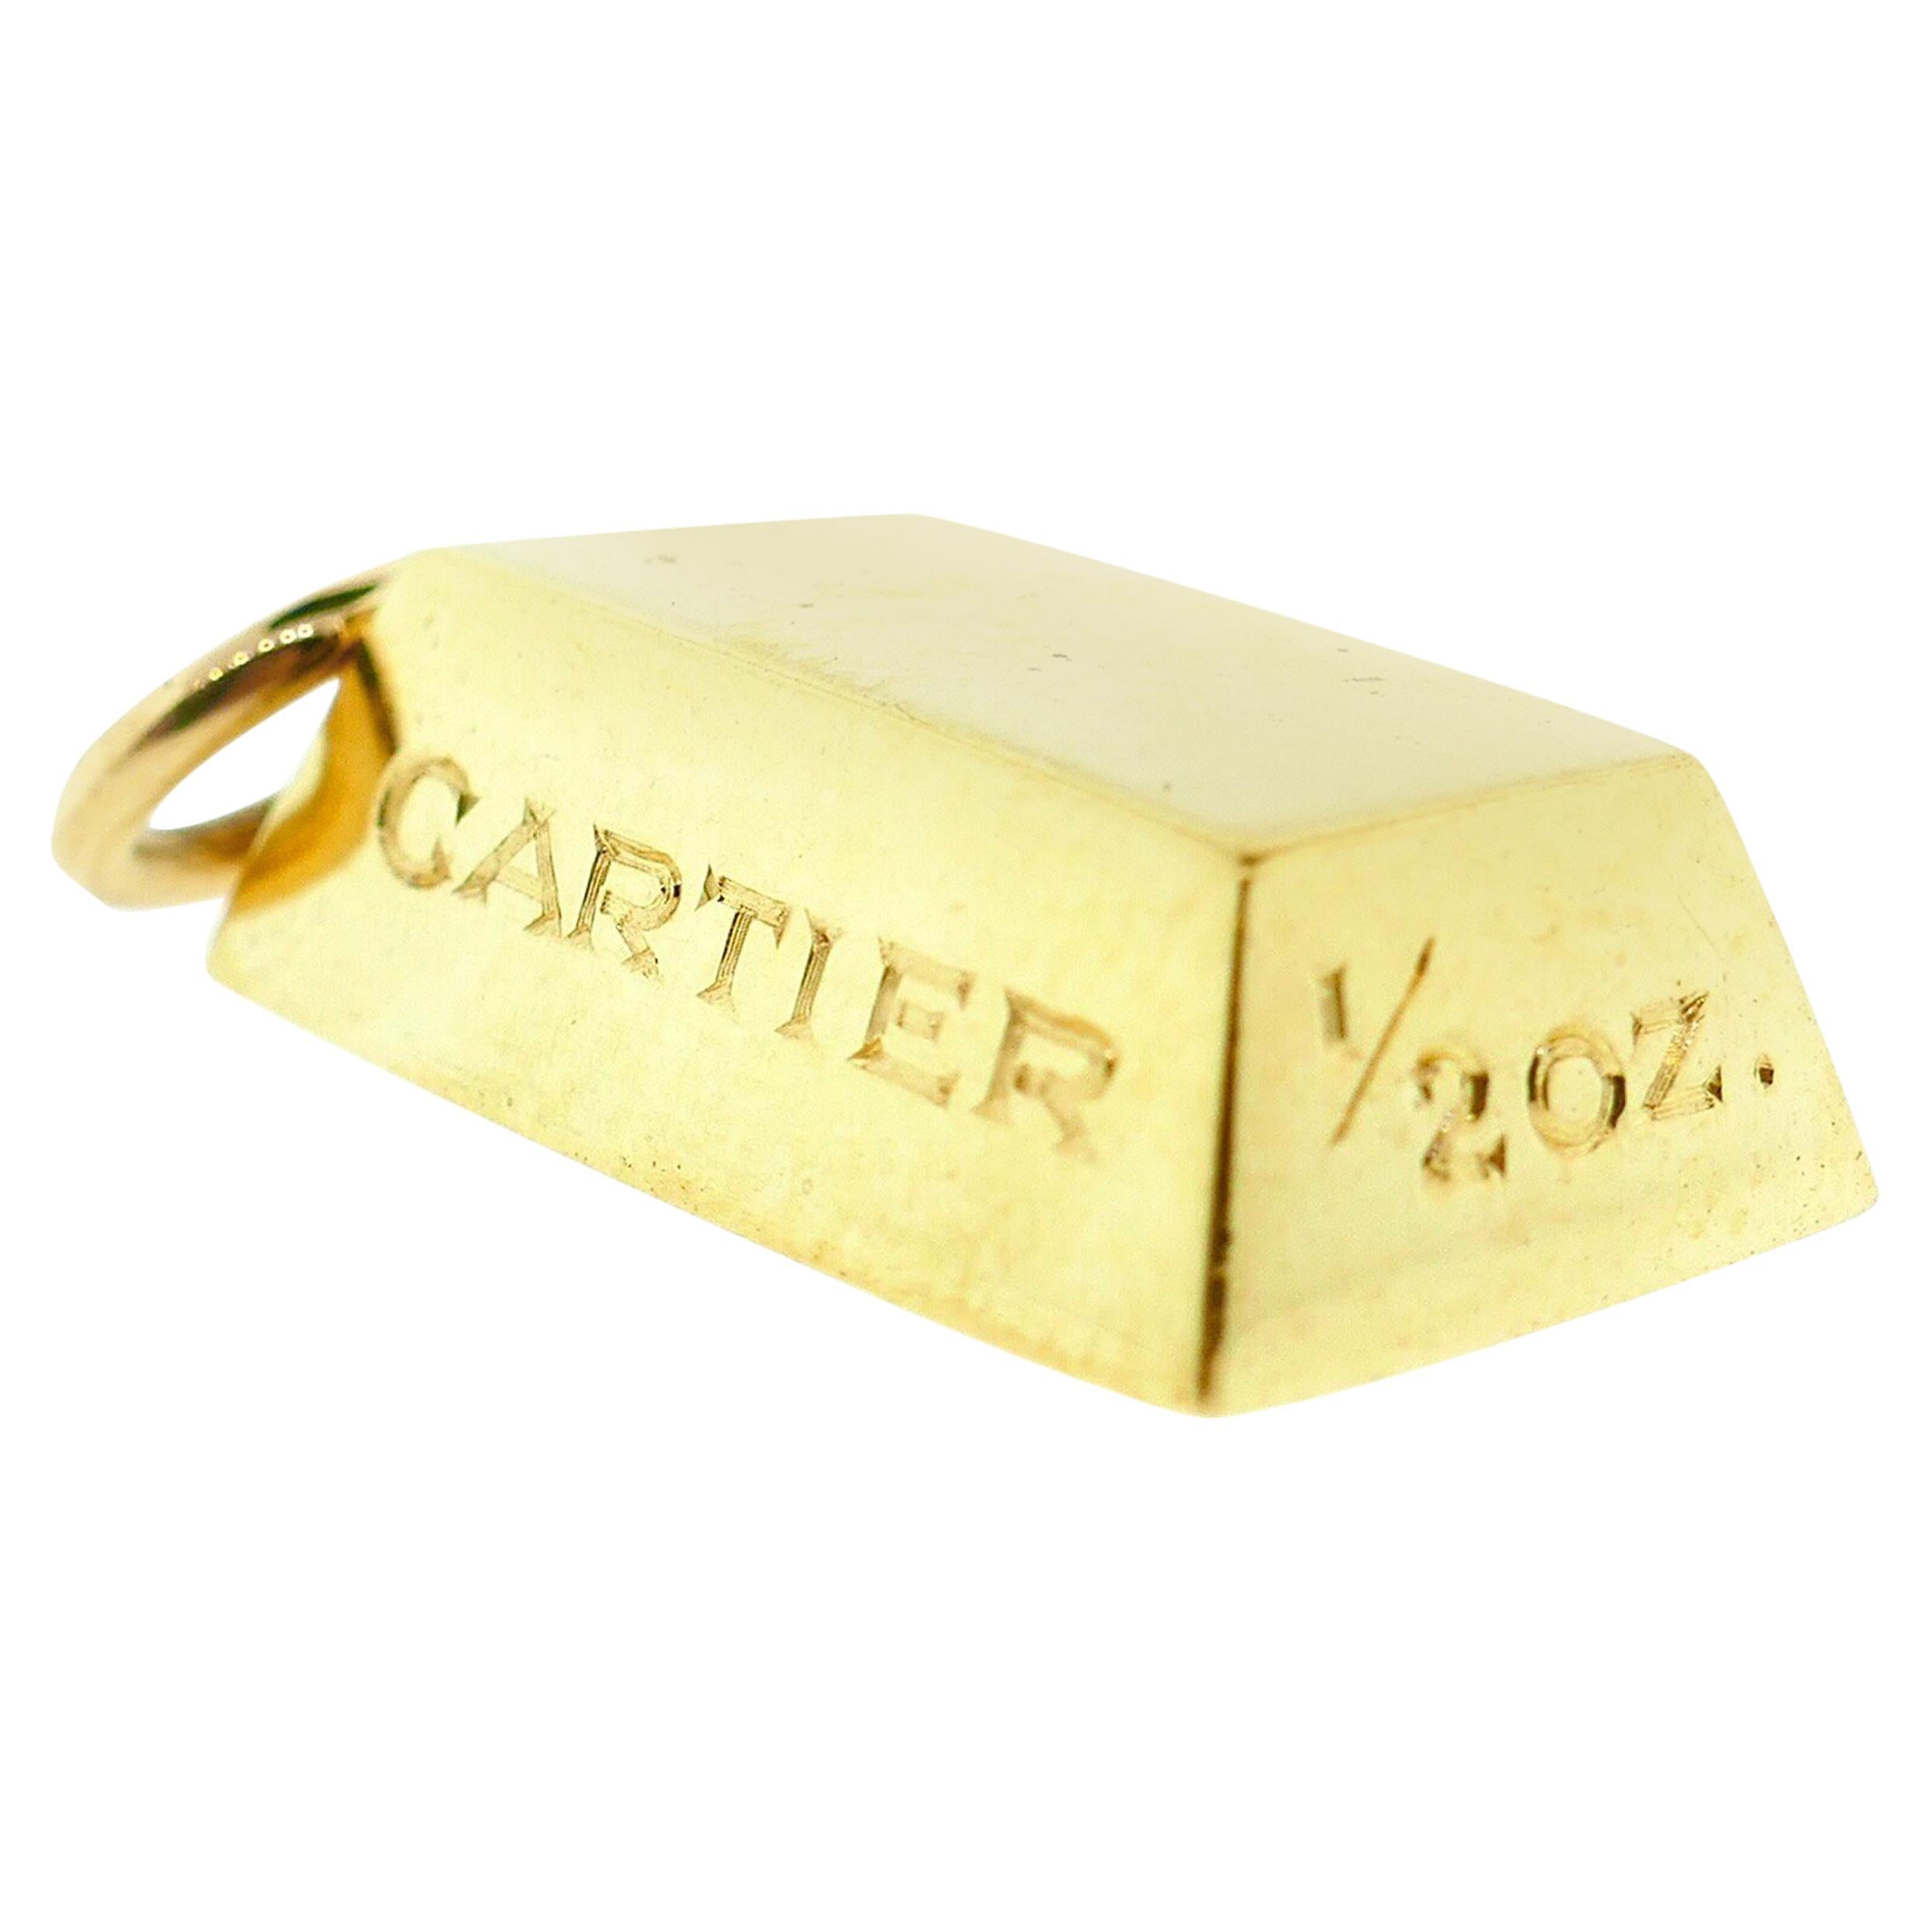 Cartier 18 Karat Yellow Gold 1/2 Oz Ingot Pendant or Charm